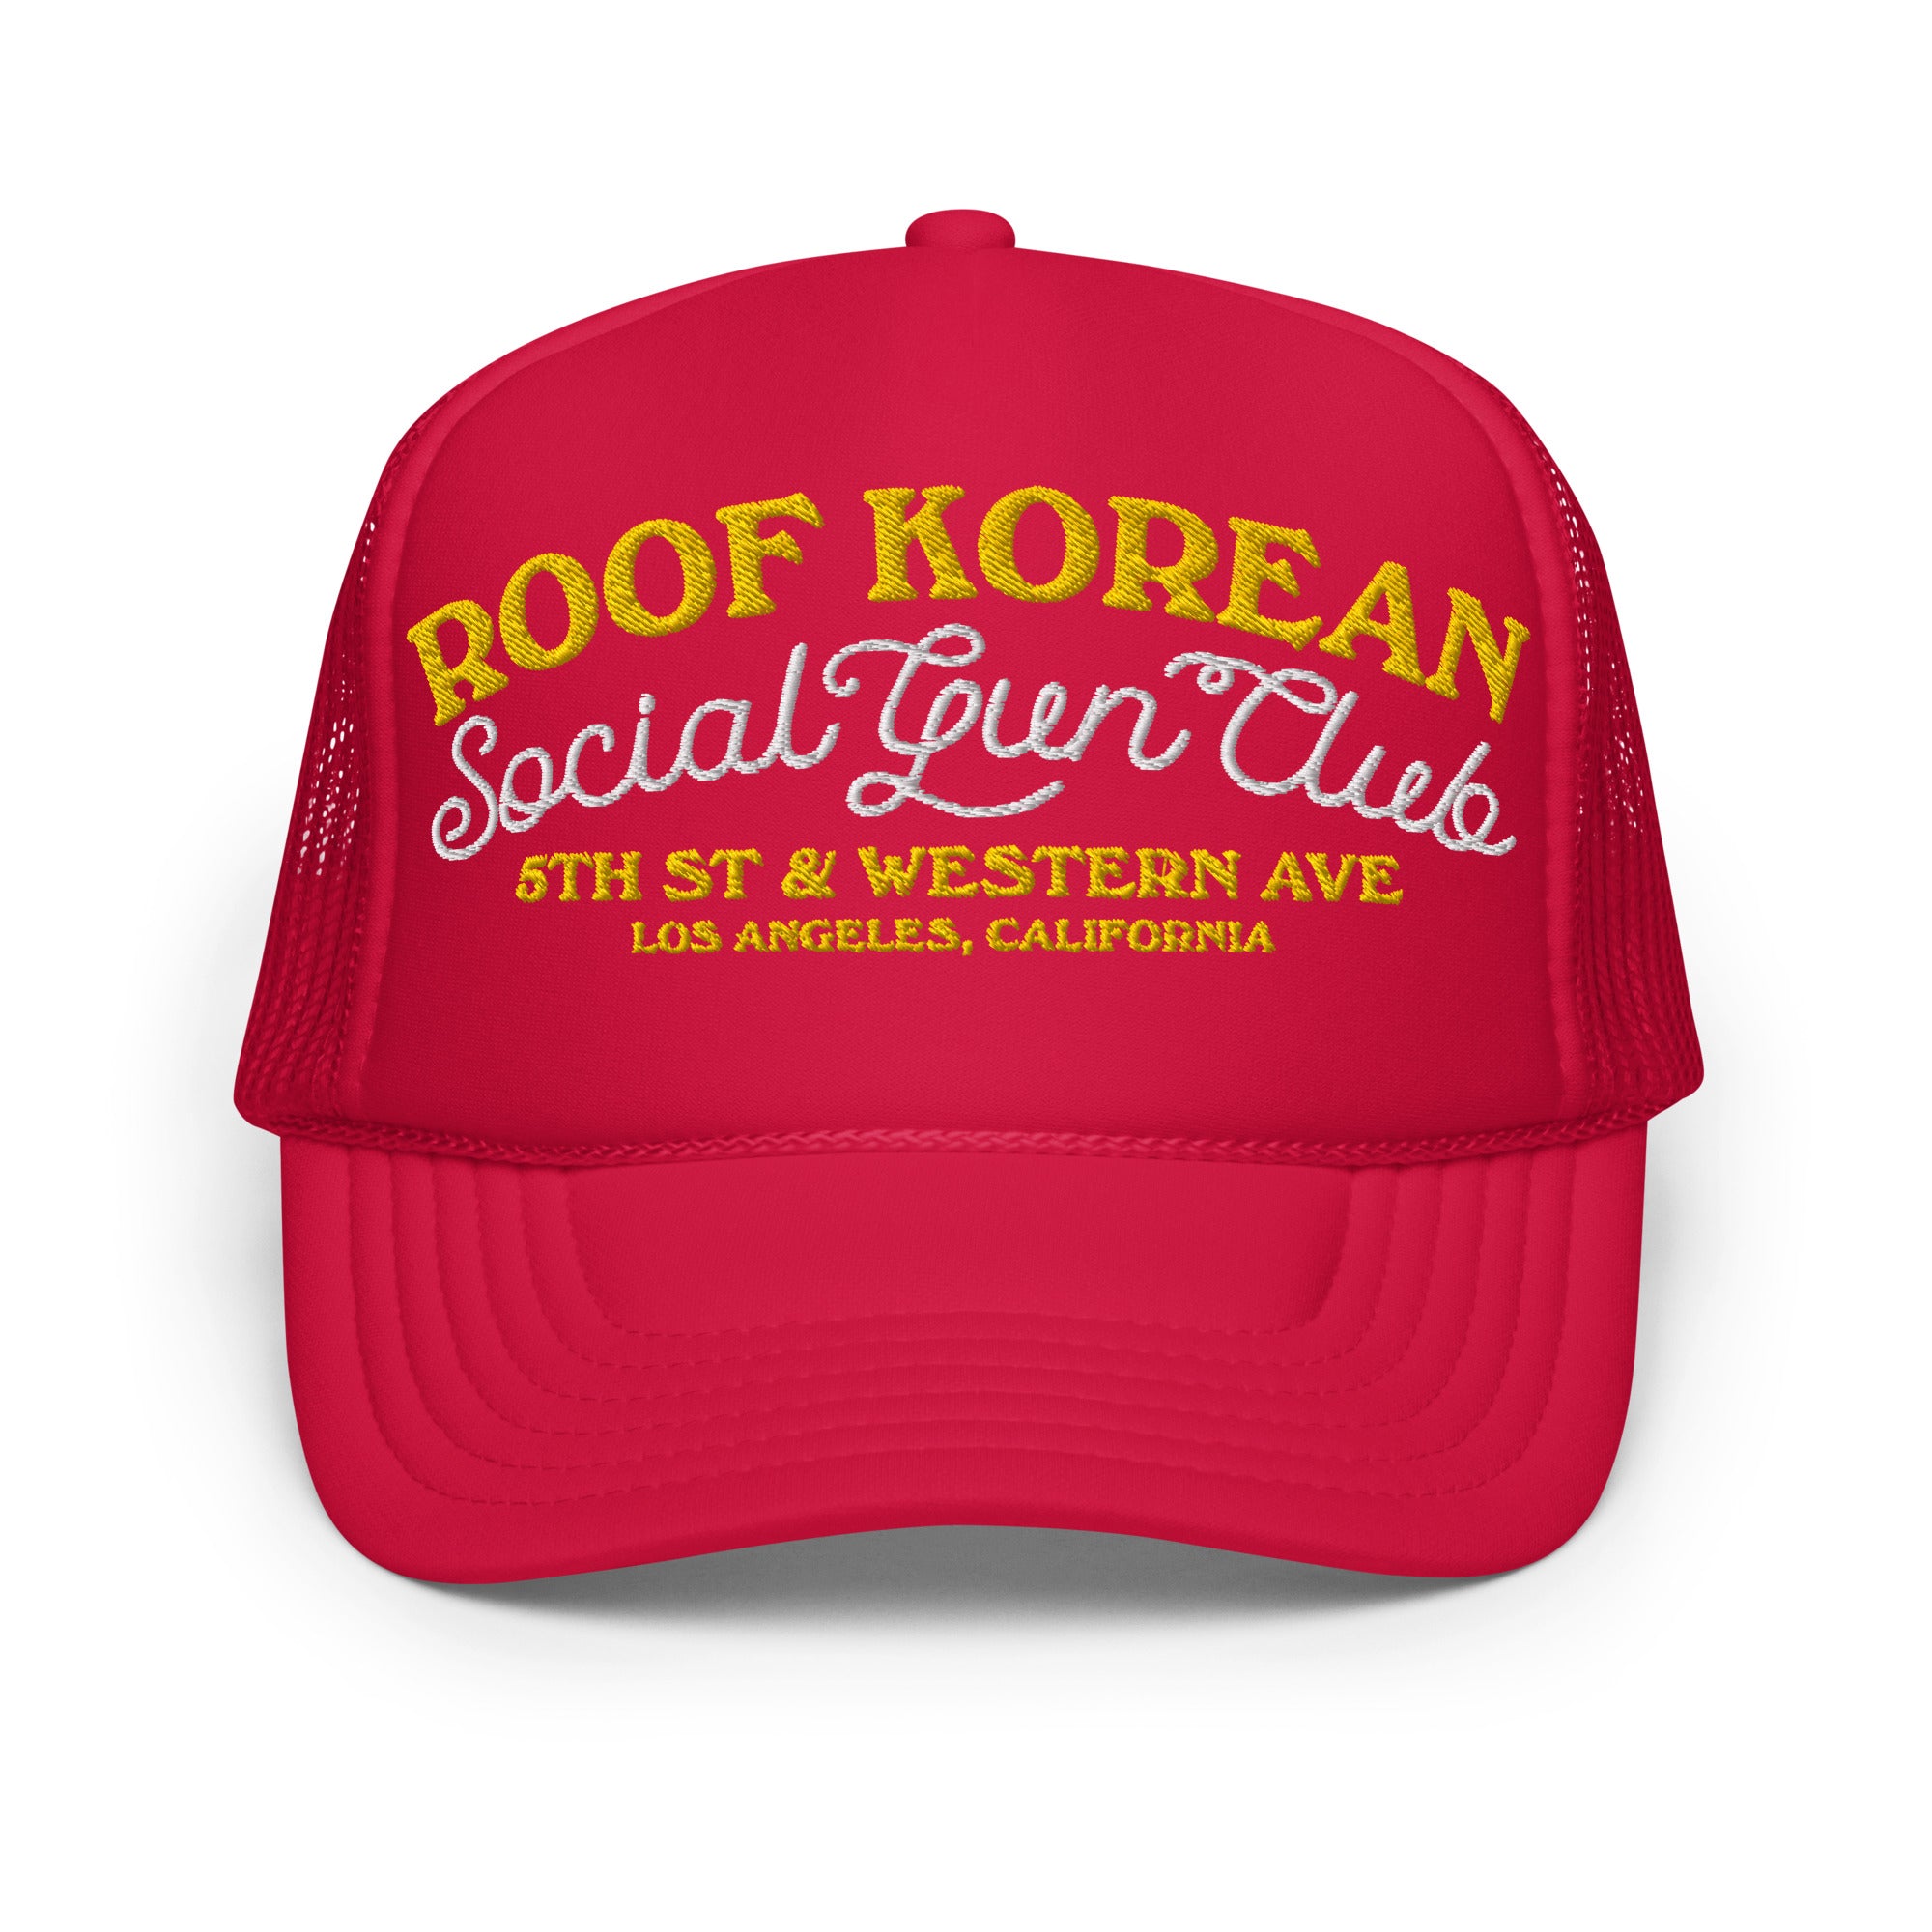 Roof Korean Social Gun Club Foam Trucker Hat